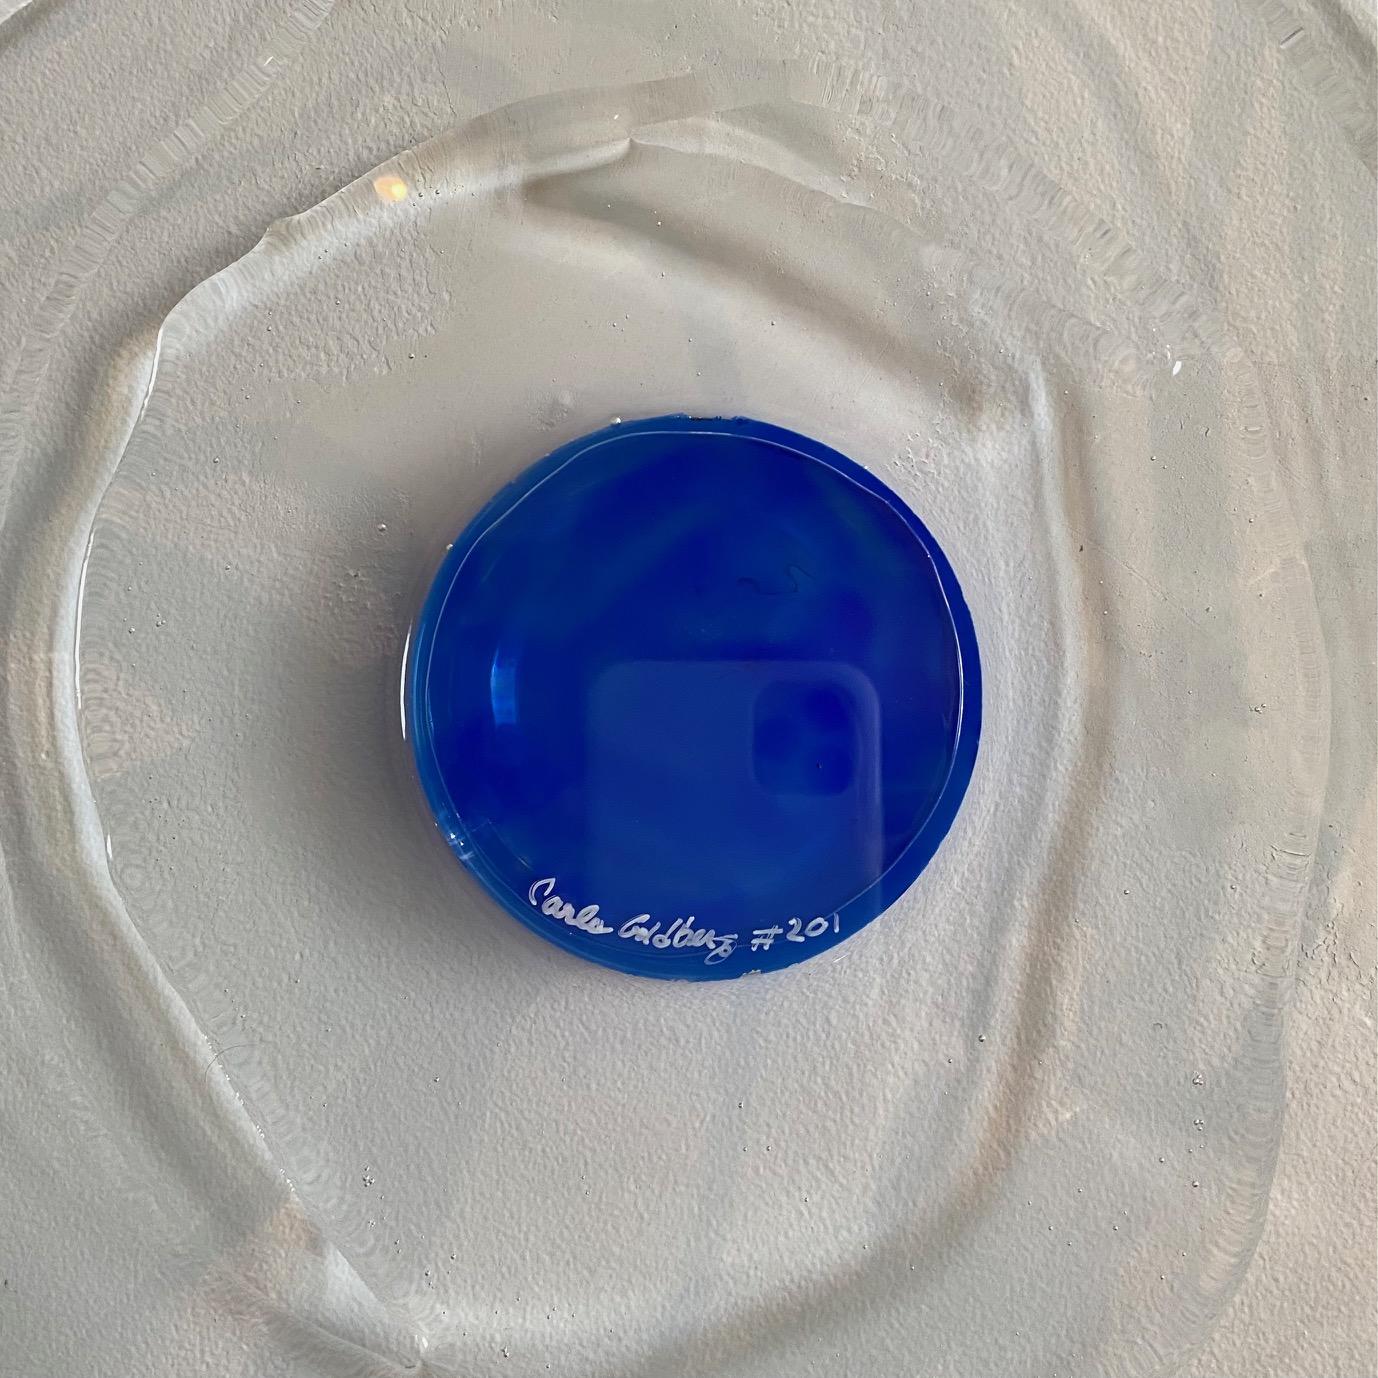 Artist: Carla Goldberg
Title: Dark Blue Bubble
Medium: Cast and Poured Resin, Enamel, Plexiglass
Size: 15 x 15 inches
Year: 

From Carla:
